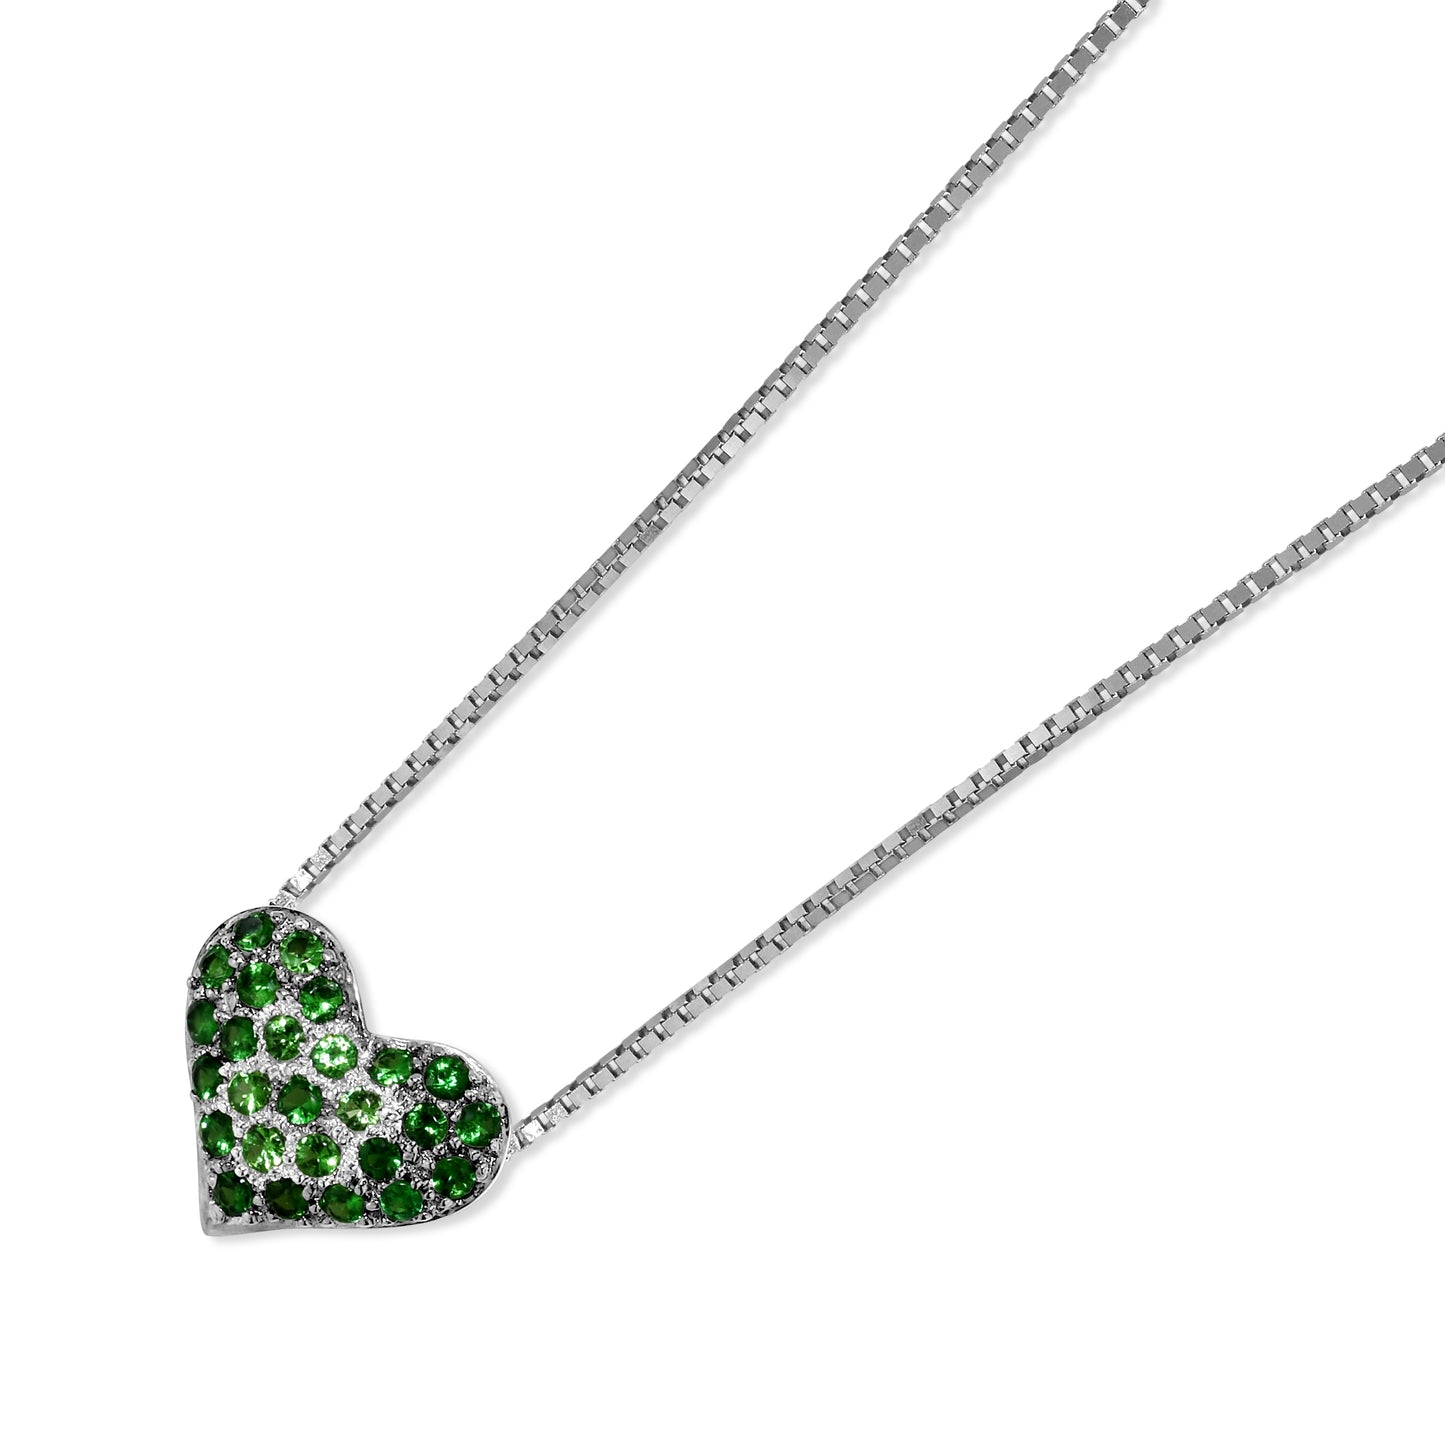 18K White Gold Shades of Green Garnet Heart Pendant Necklace